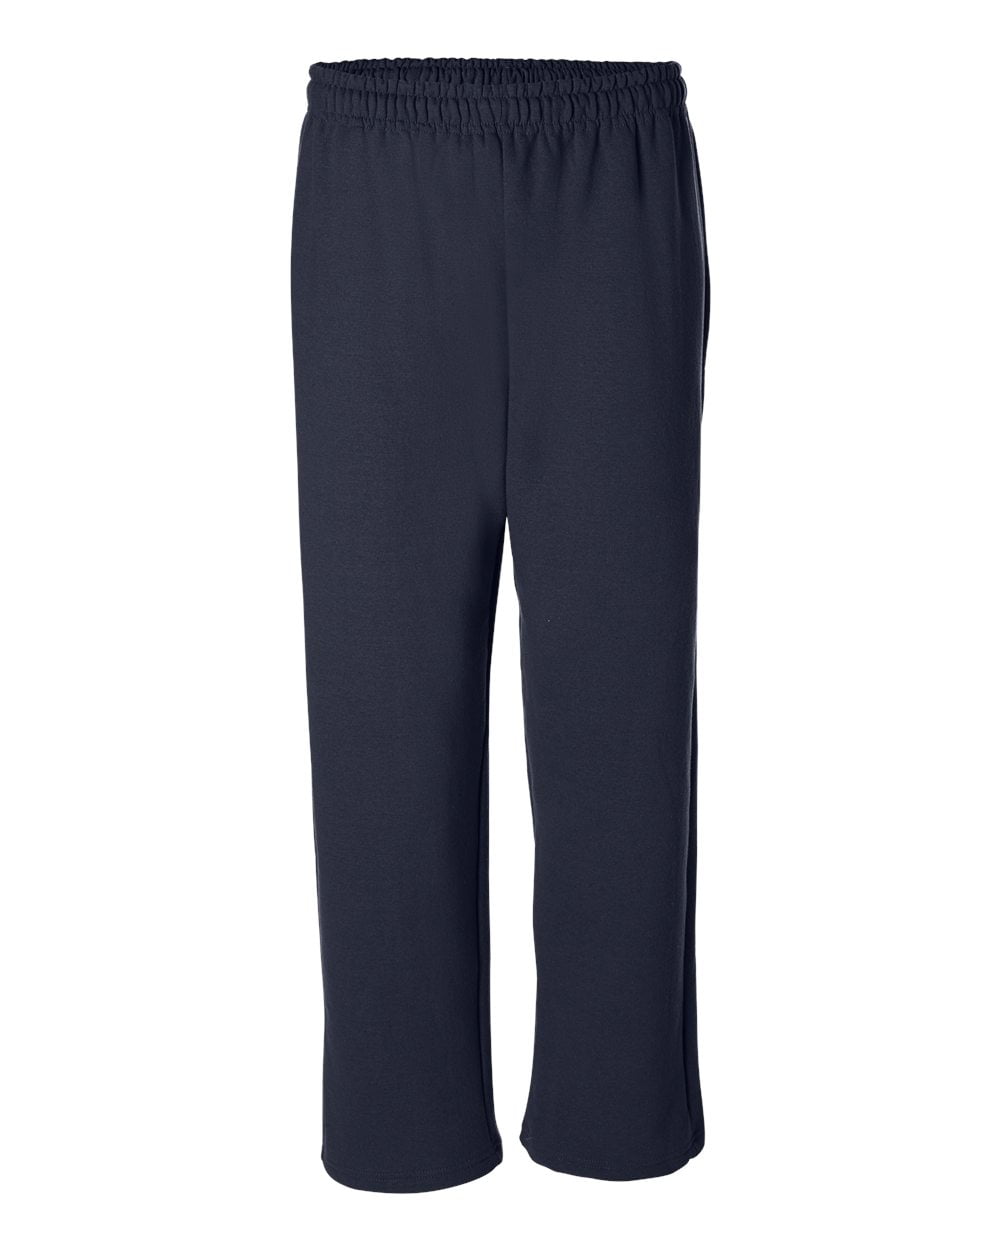 Gildan Men's Fleece Open Bottom Pocketed Sweatpants, up to Size 2XL